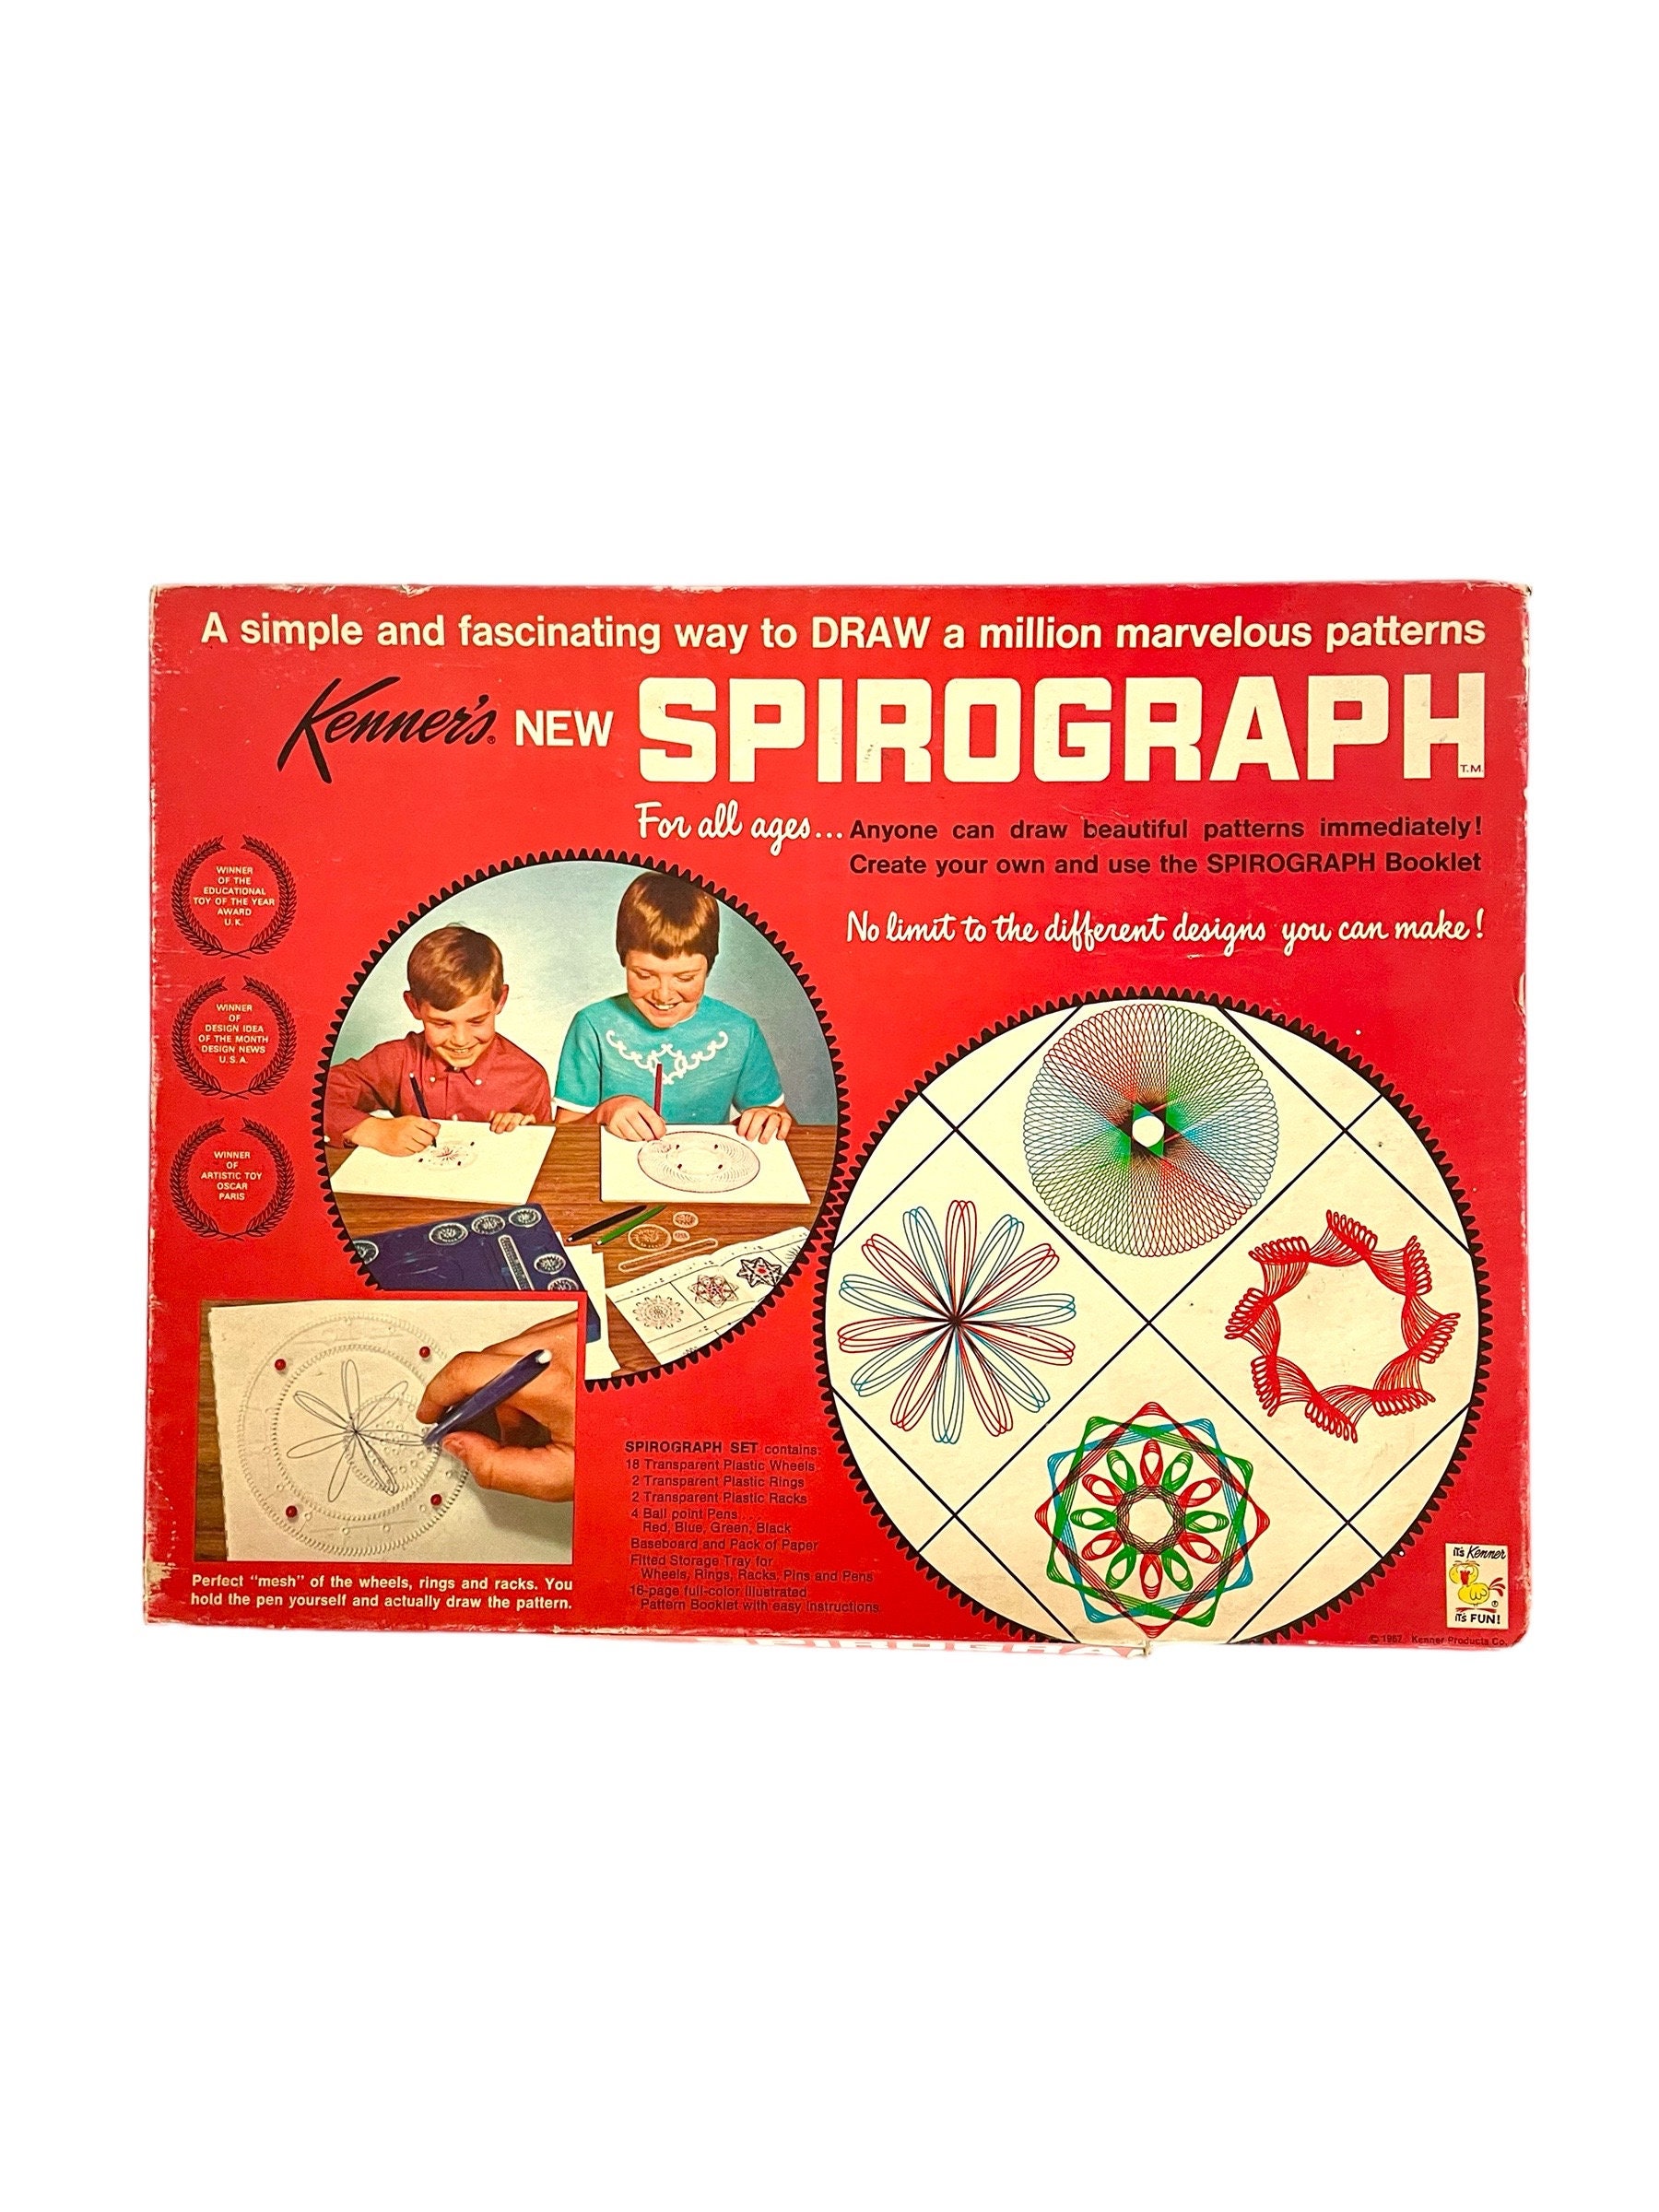 The Original Spirograph Design Set - #92323 - Mindtaker Miniatures